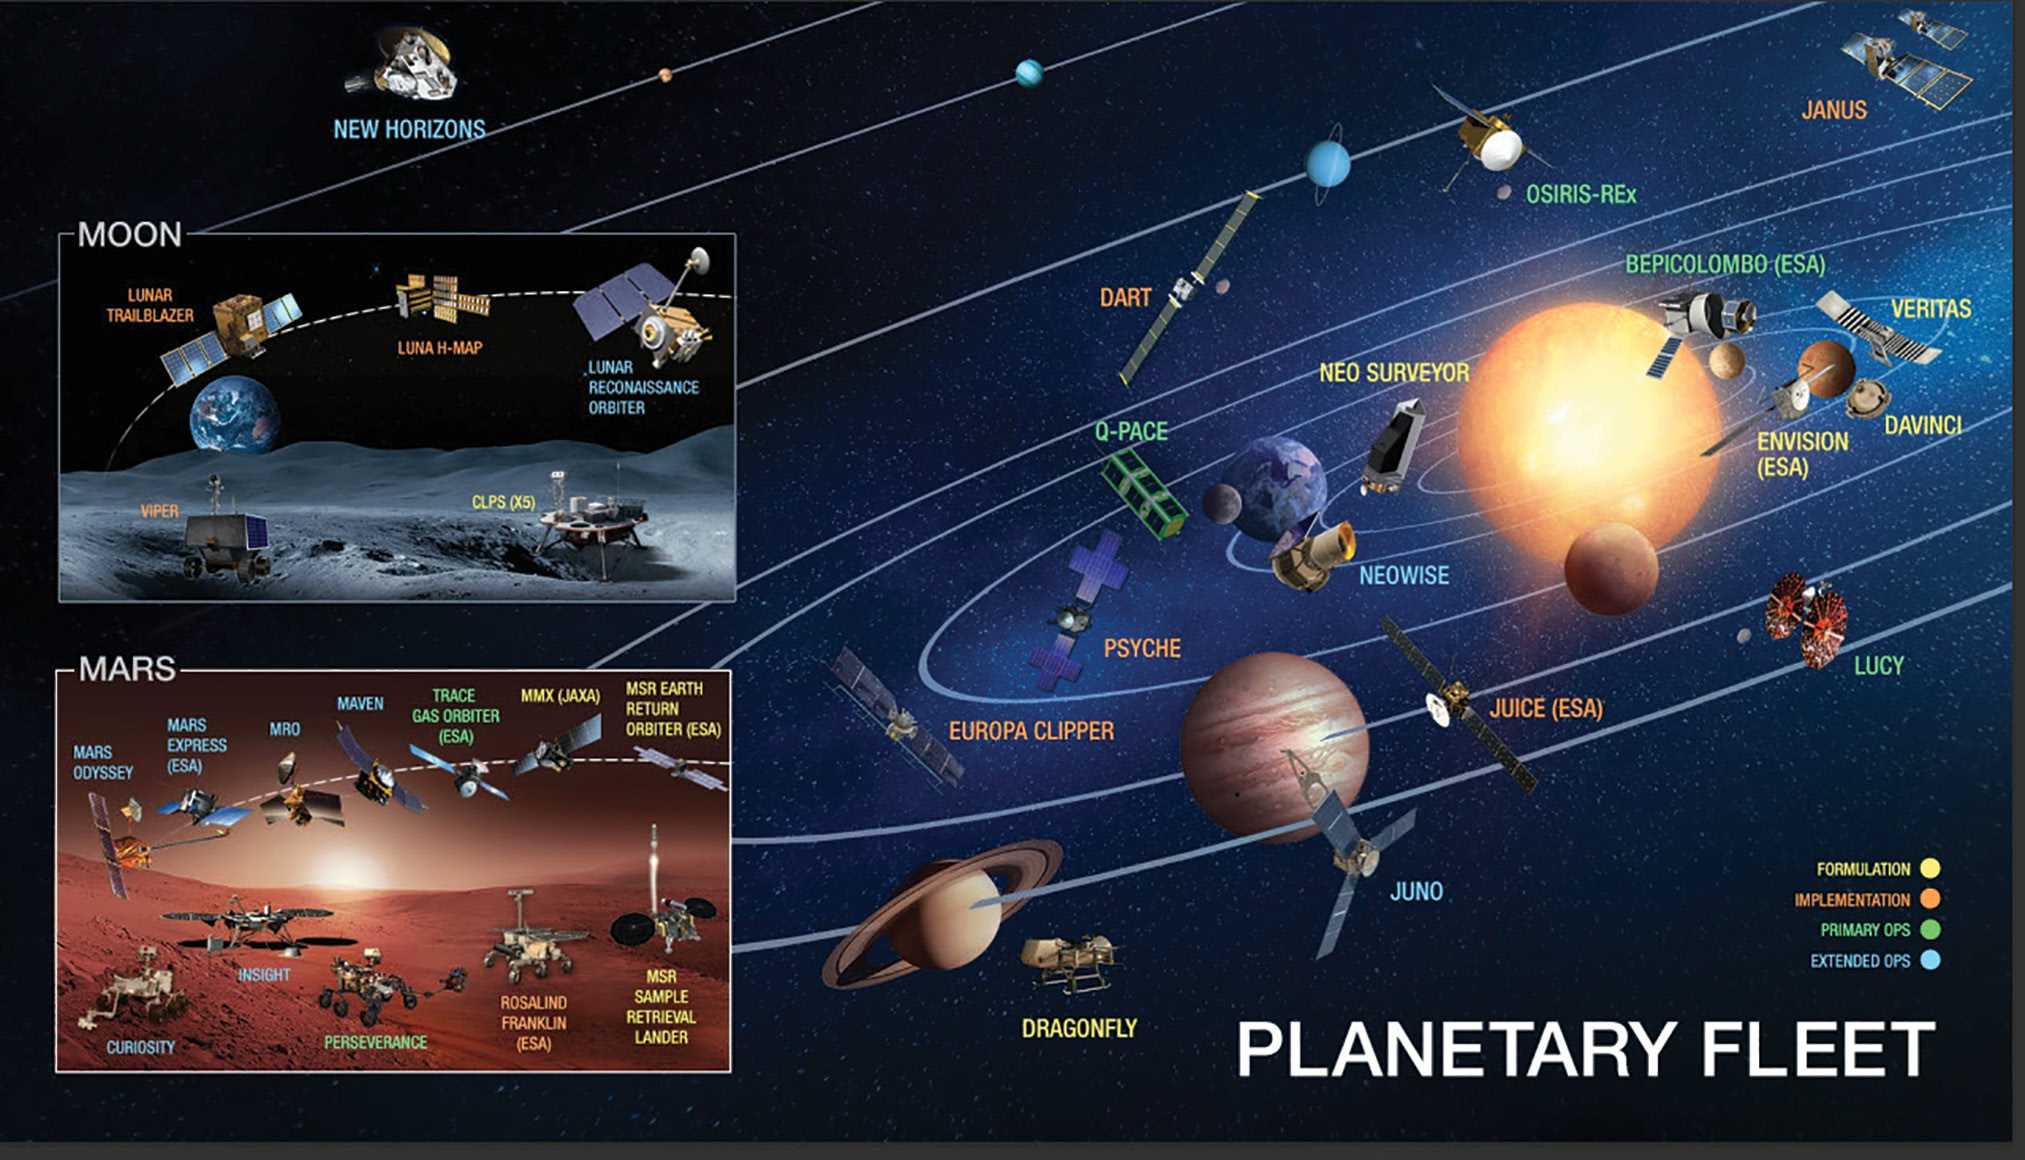 Figure 1 NASA’s planetary fleet (https://go.nasa.gov/3K7EnbZ).